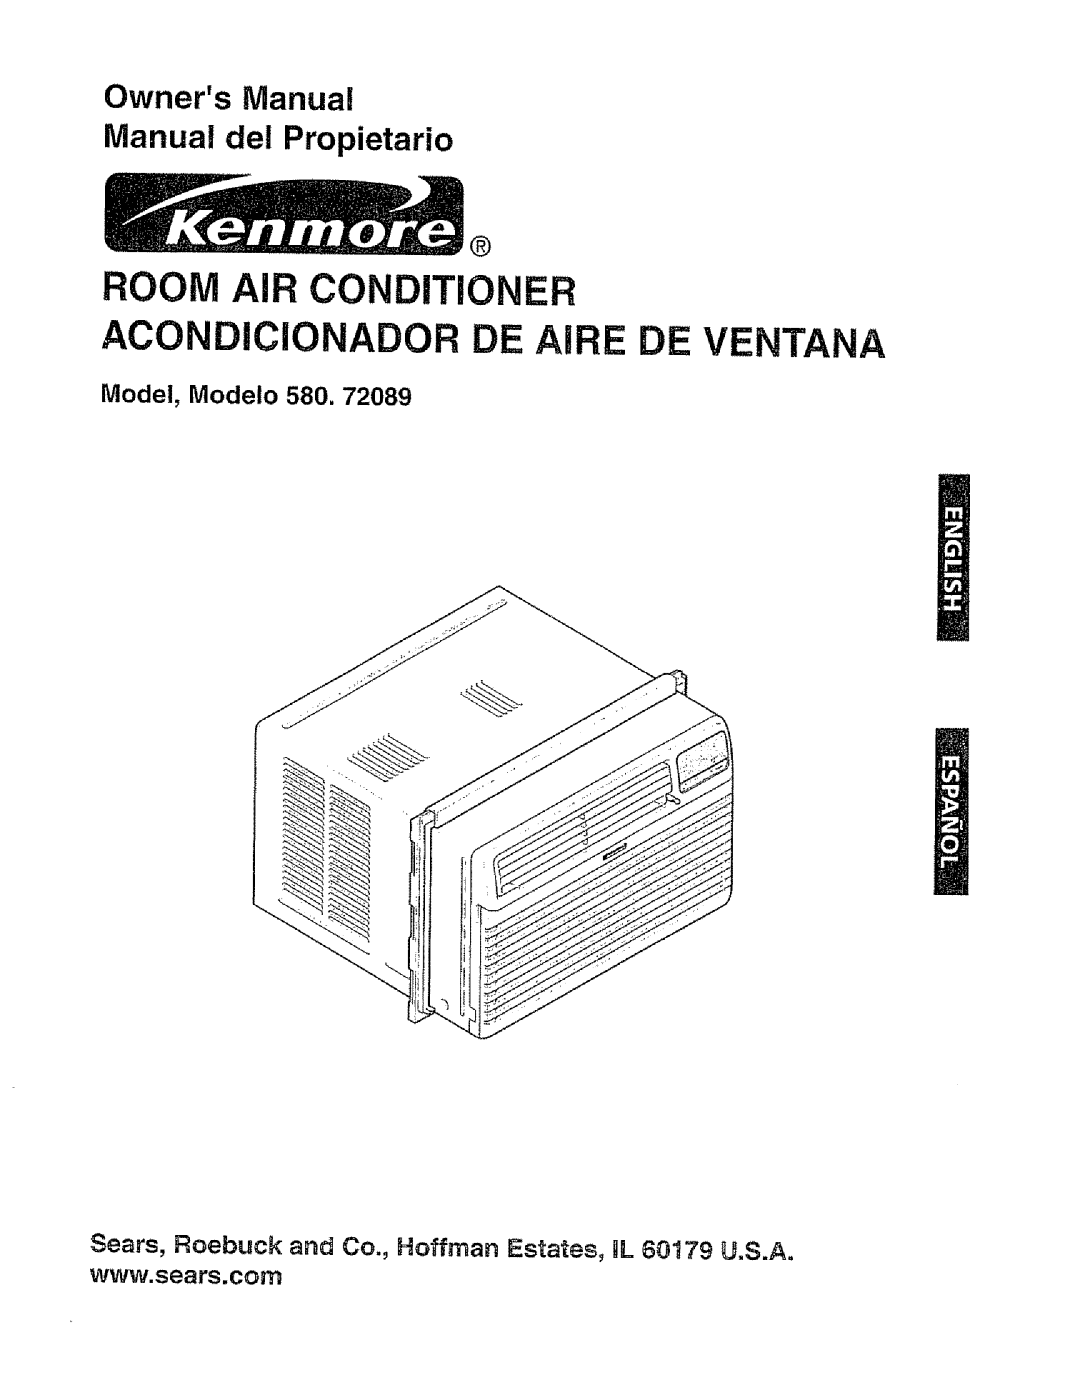 Kenmore 580. 72089 owner manual Room Ai Conditioner, Manual del Propietario, Model, Modelo 580, OwnersManual 